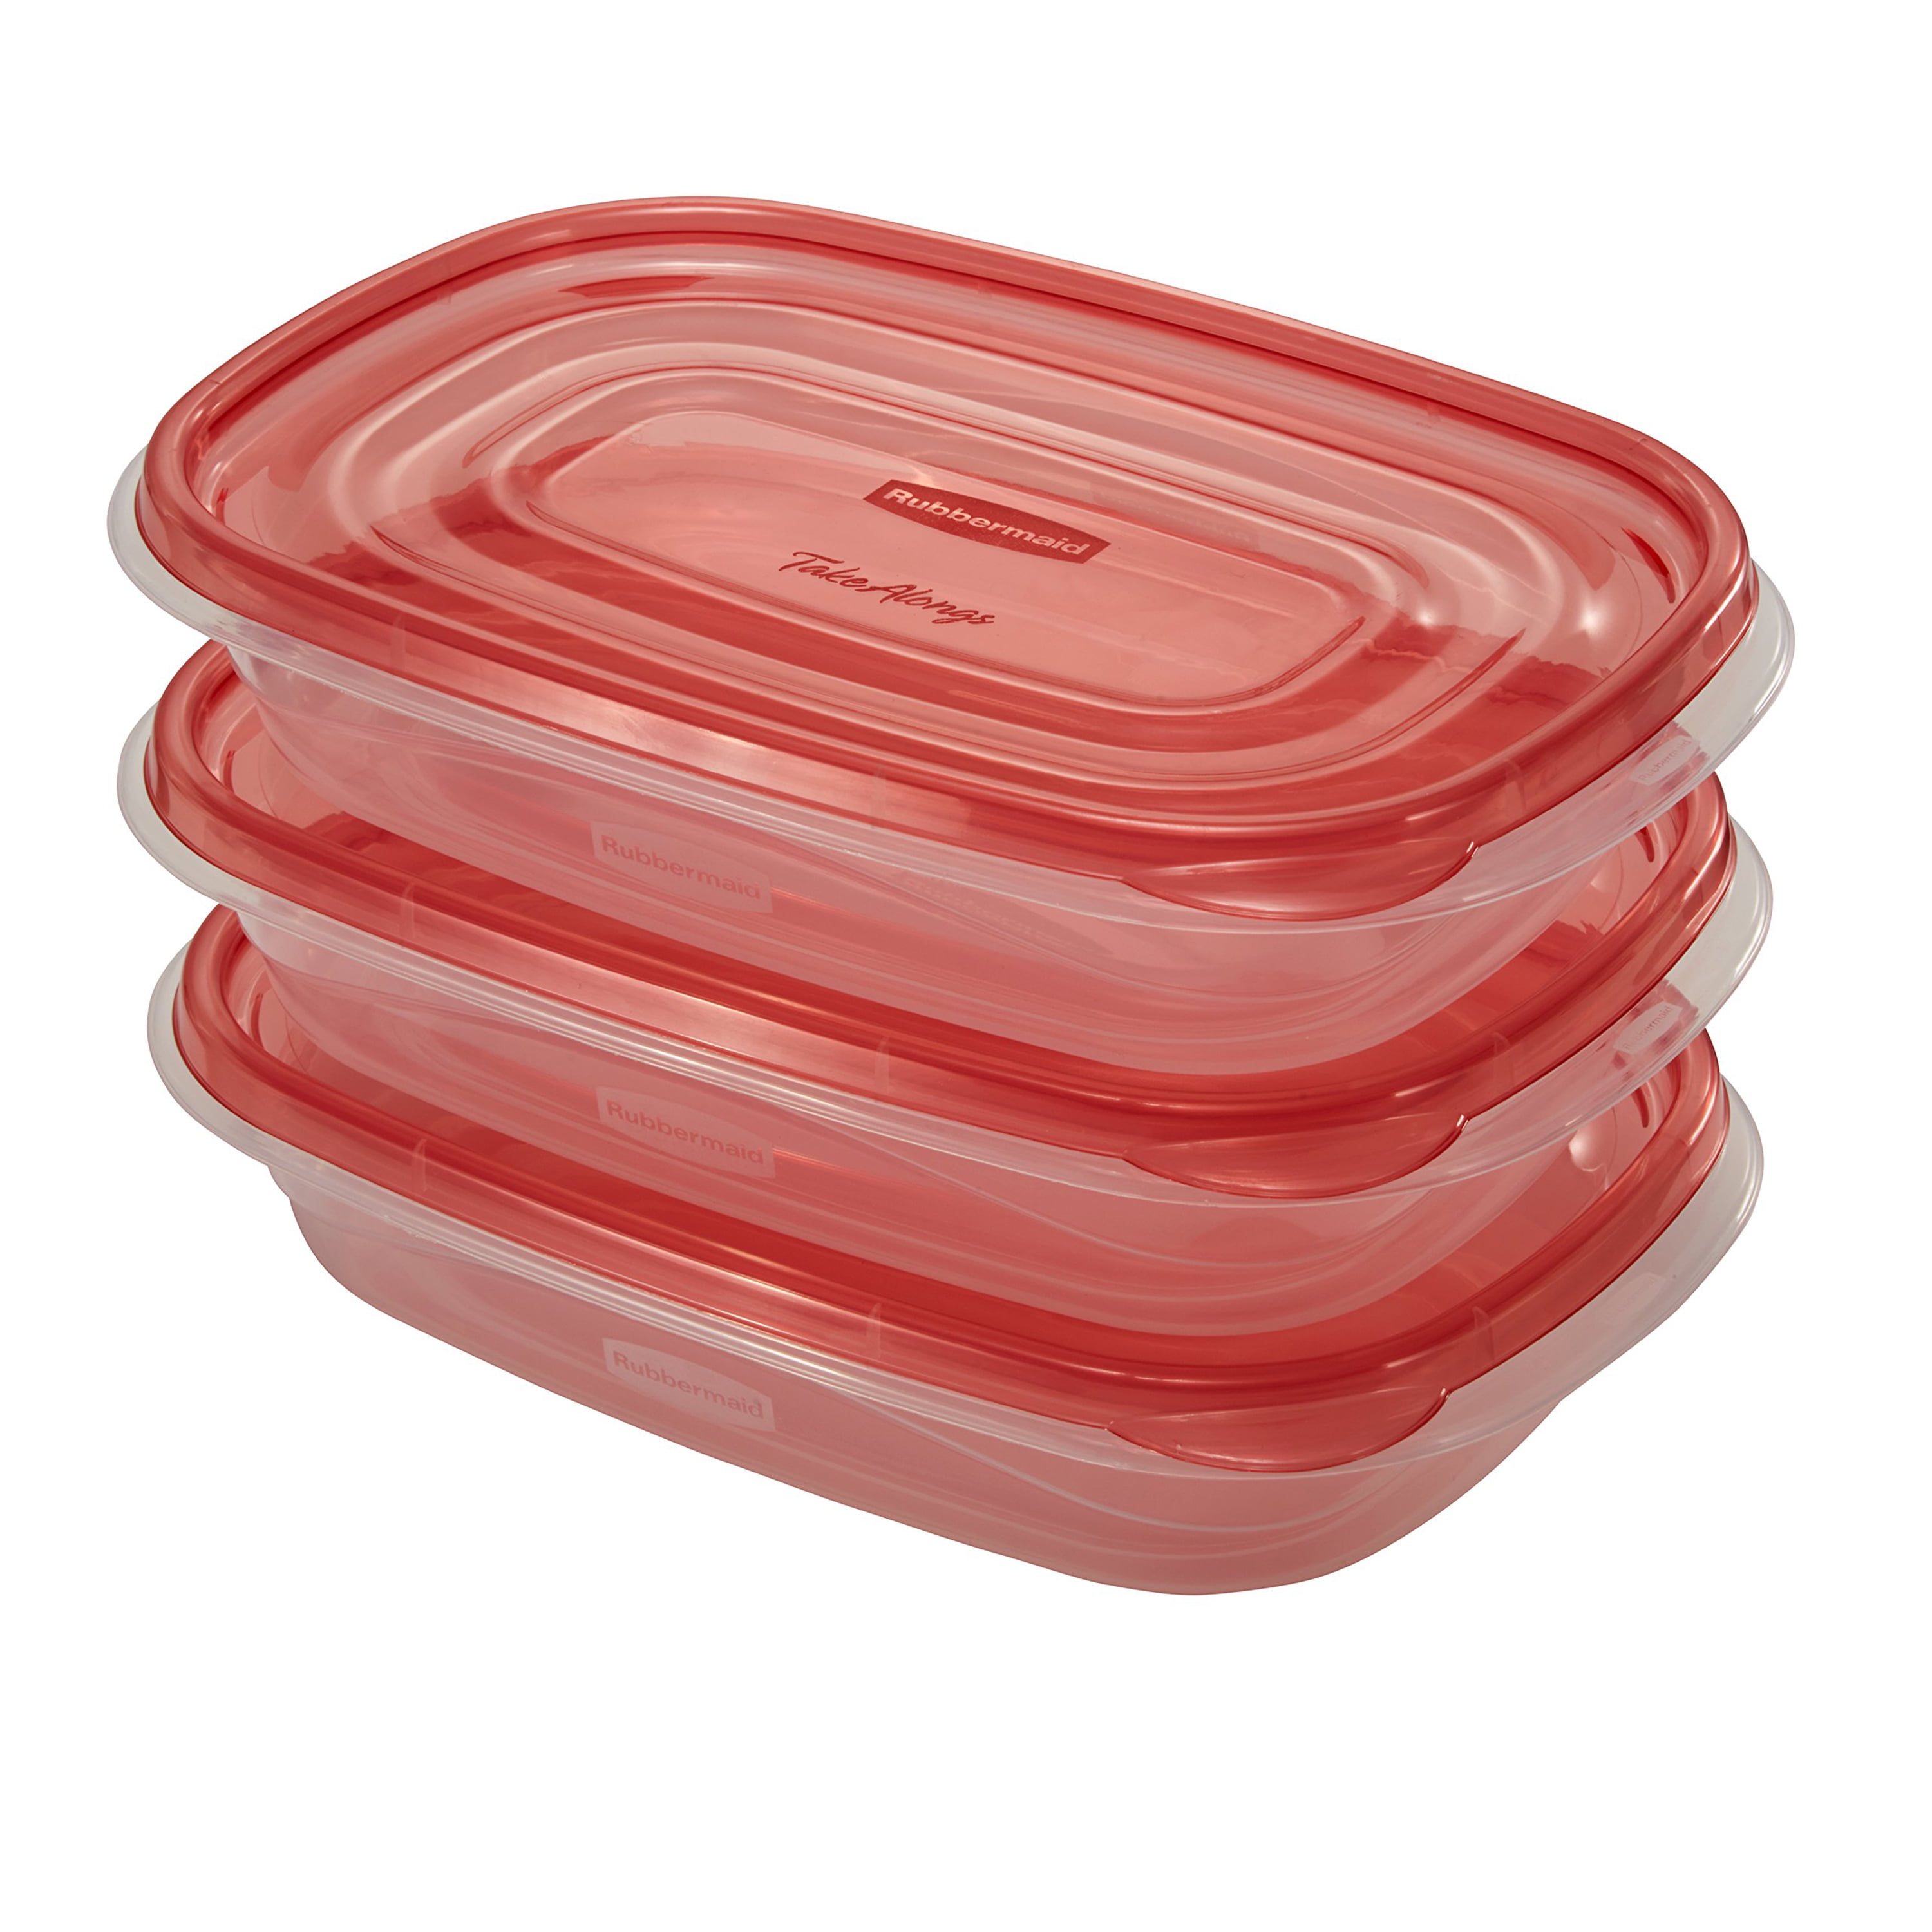 Rubbermaid® Take Alongs Meal Prep Rectangle BPA-Free Plastic Food